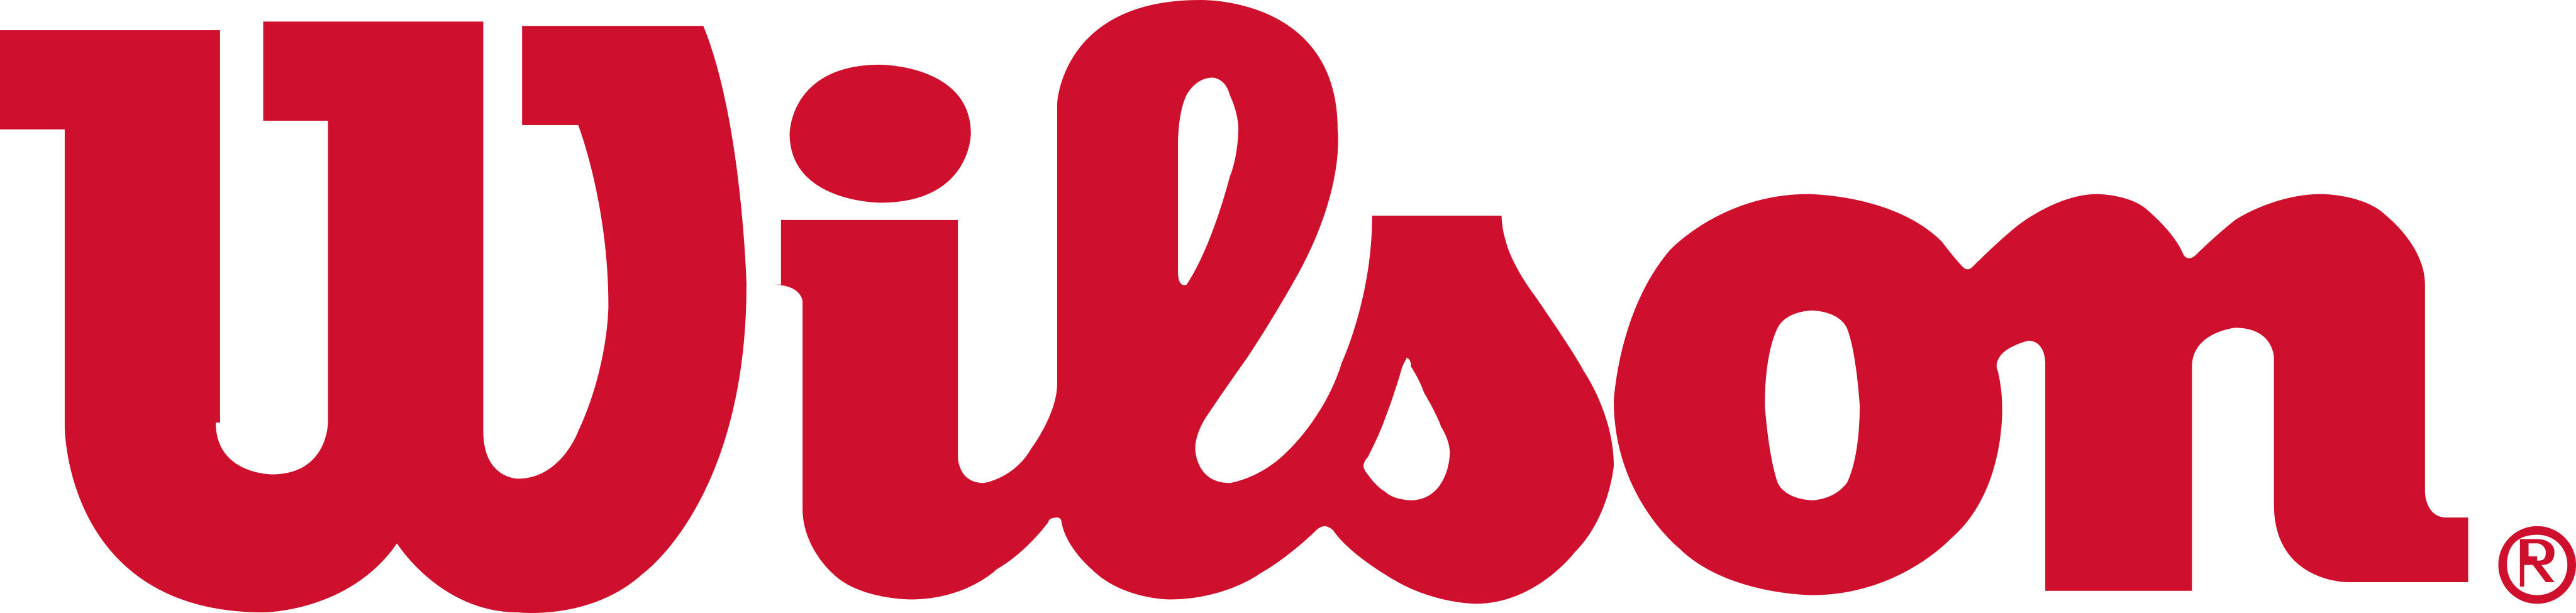 Wilson Logo.